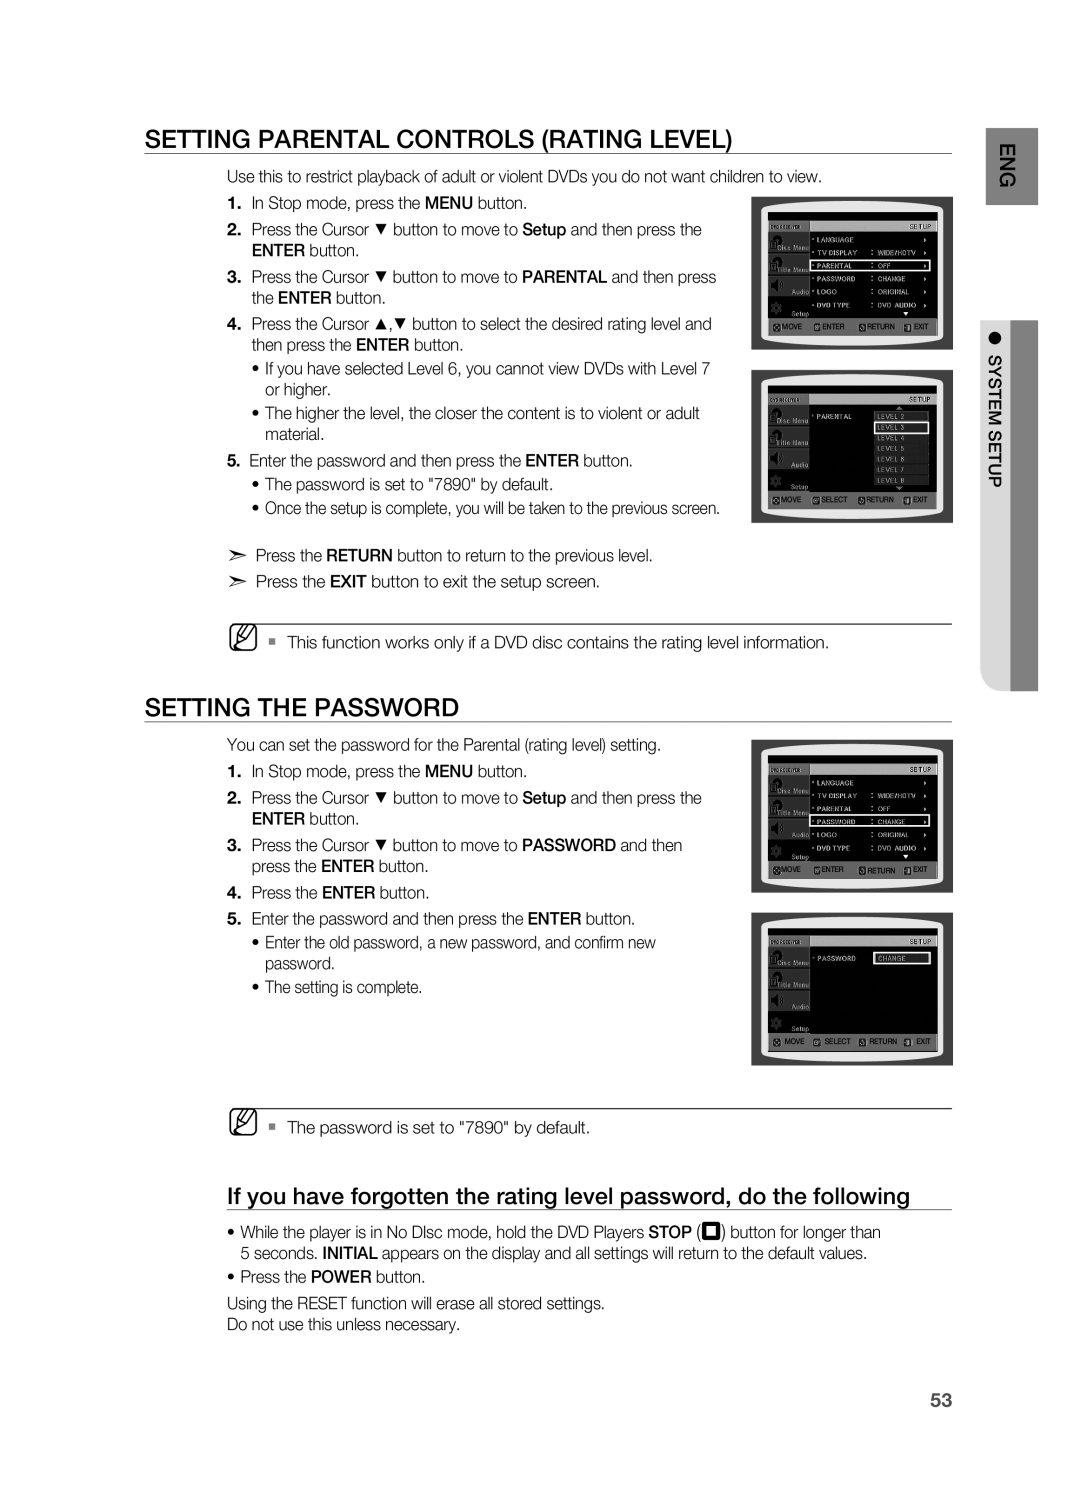 Samsung HT-TWZ315 manual Setting Parental Controls Rating Level, Setting the Password 